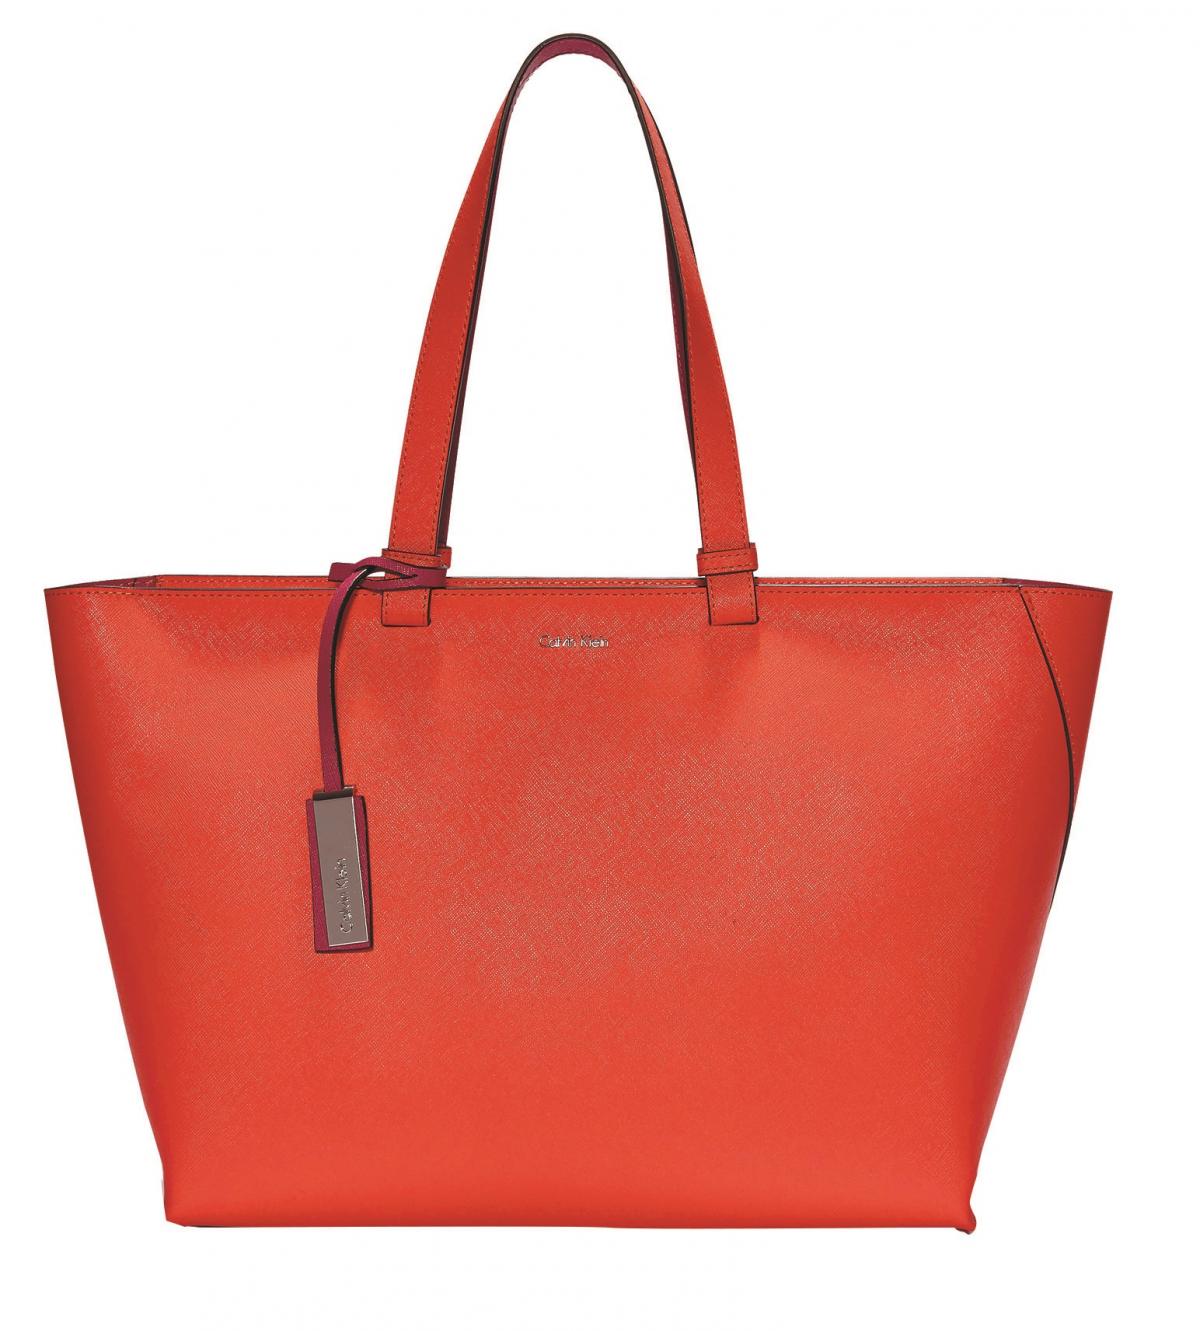 Calvin Klein Coral tote bag at House of Fraser, £188